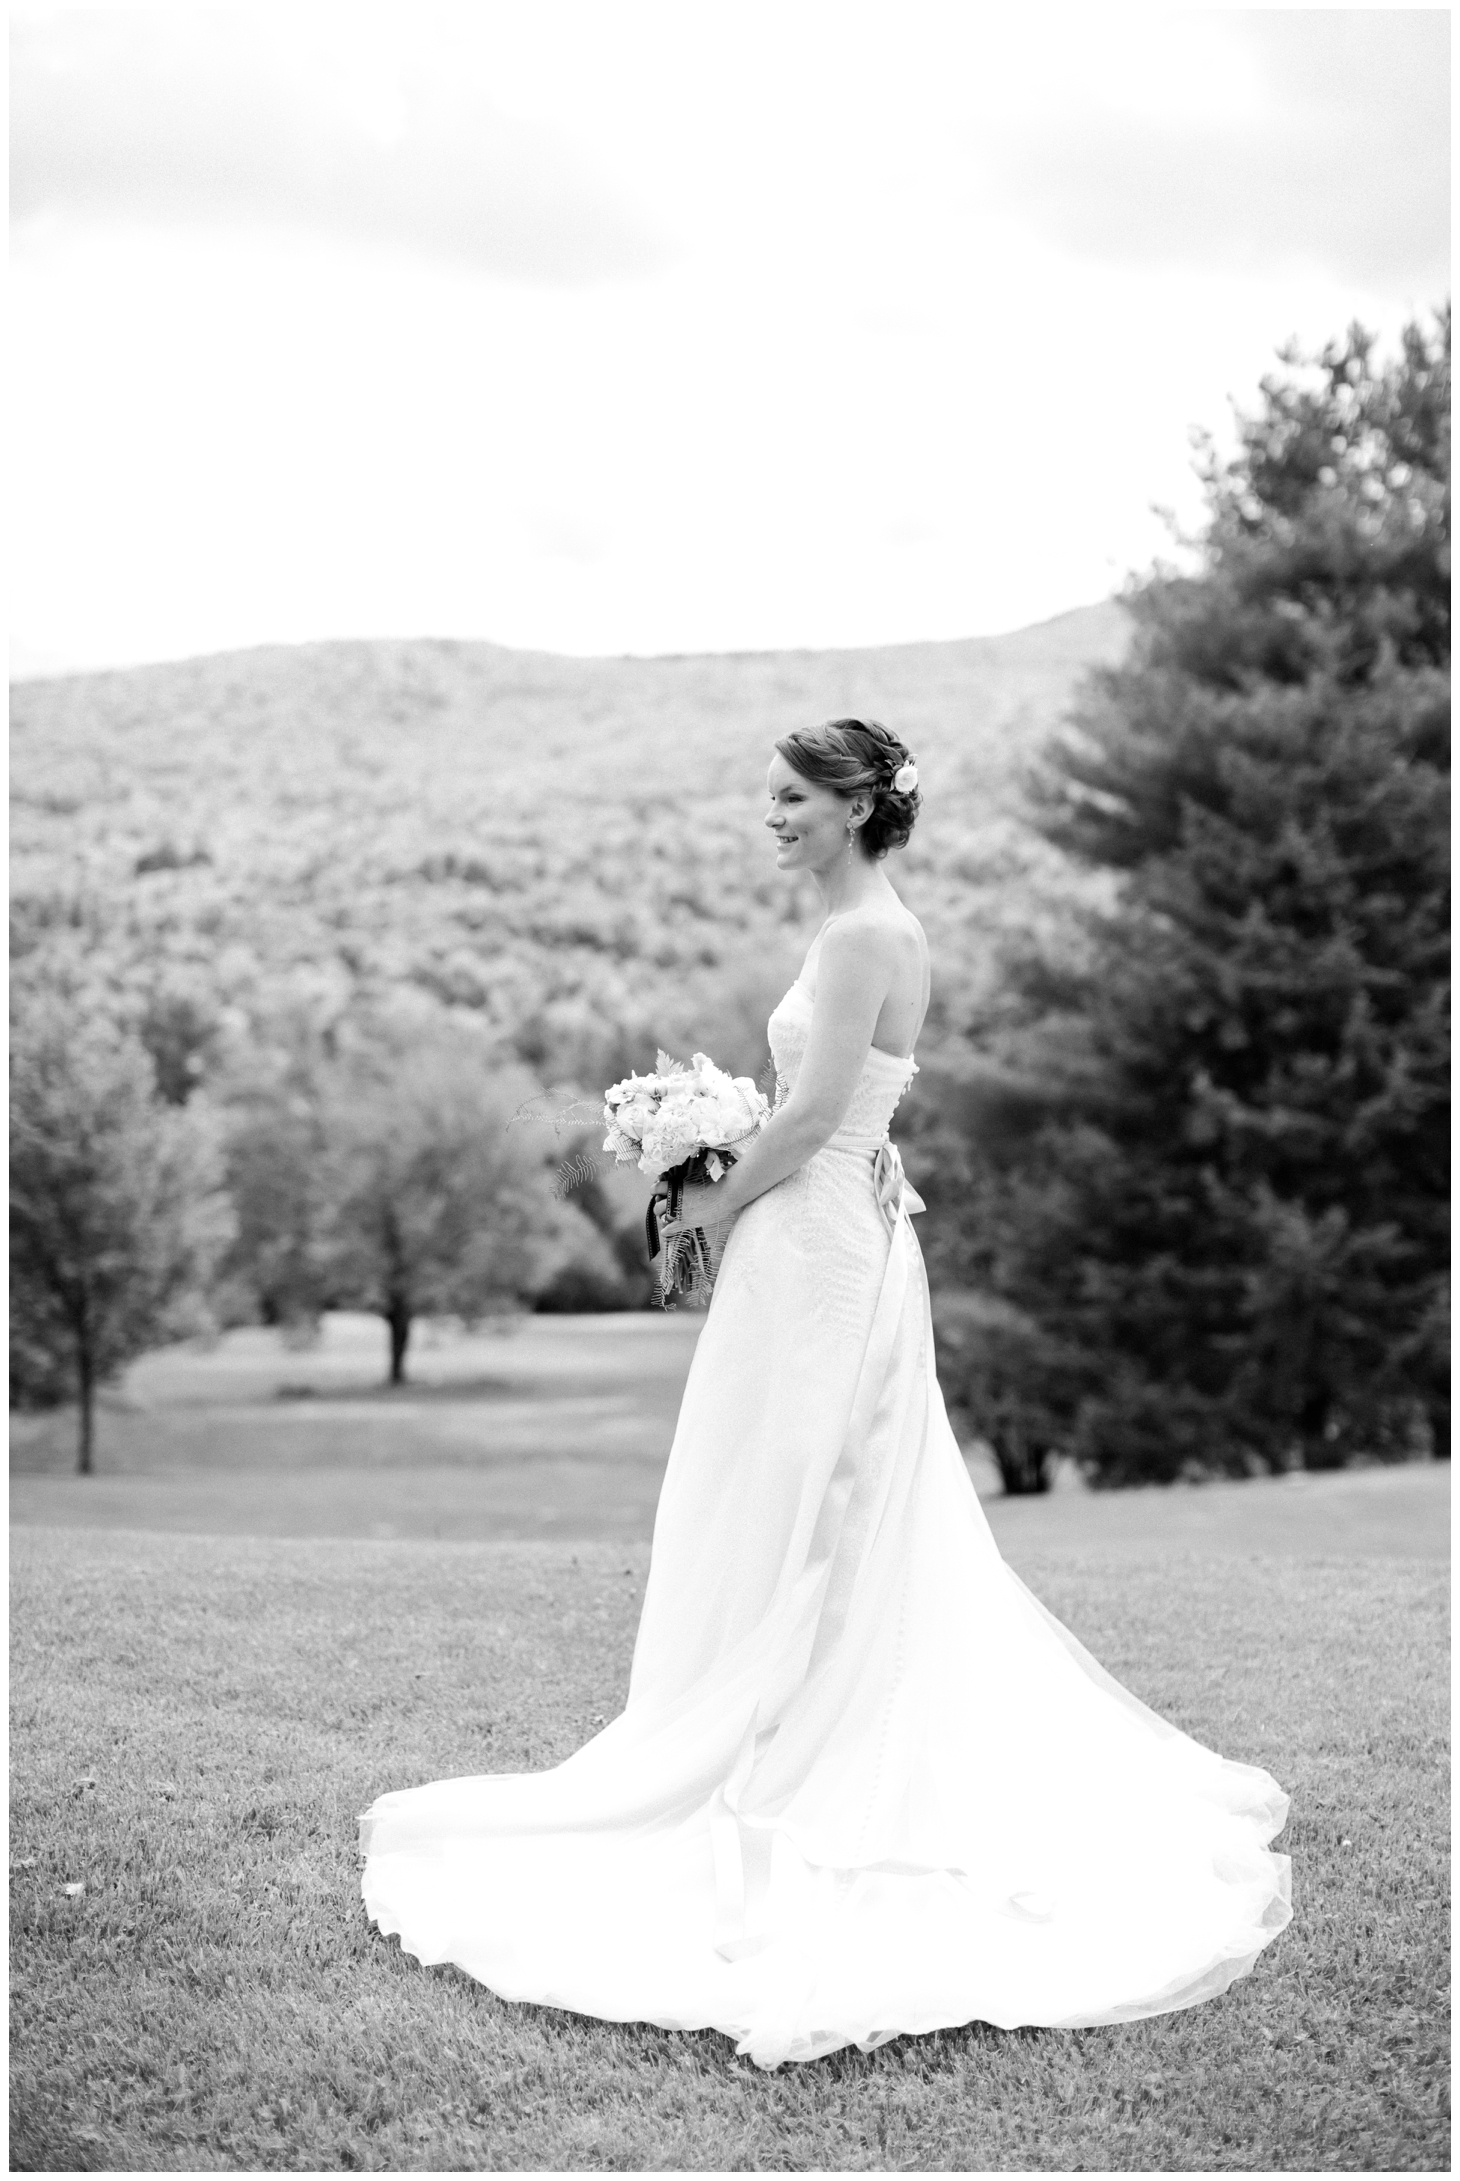 Kris & Christine's Mountain-Inspired Vermont Lodge Wedding - by Sarah Bradshaw Photography_0040